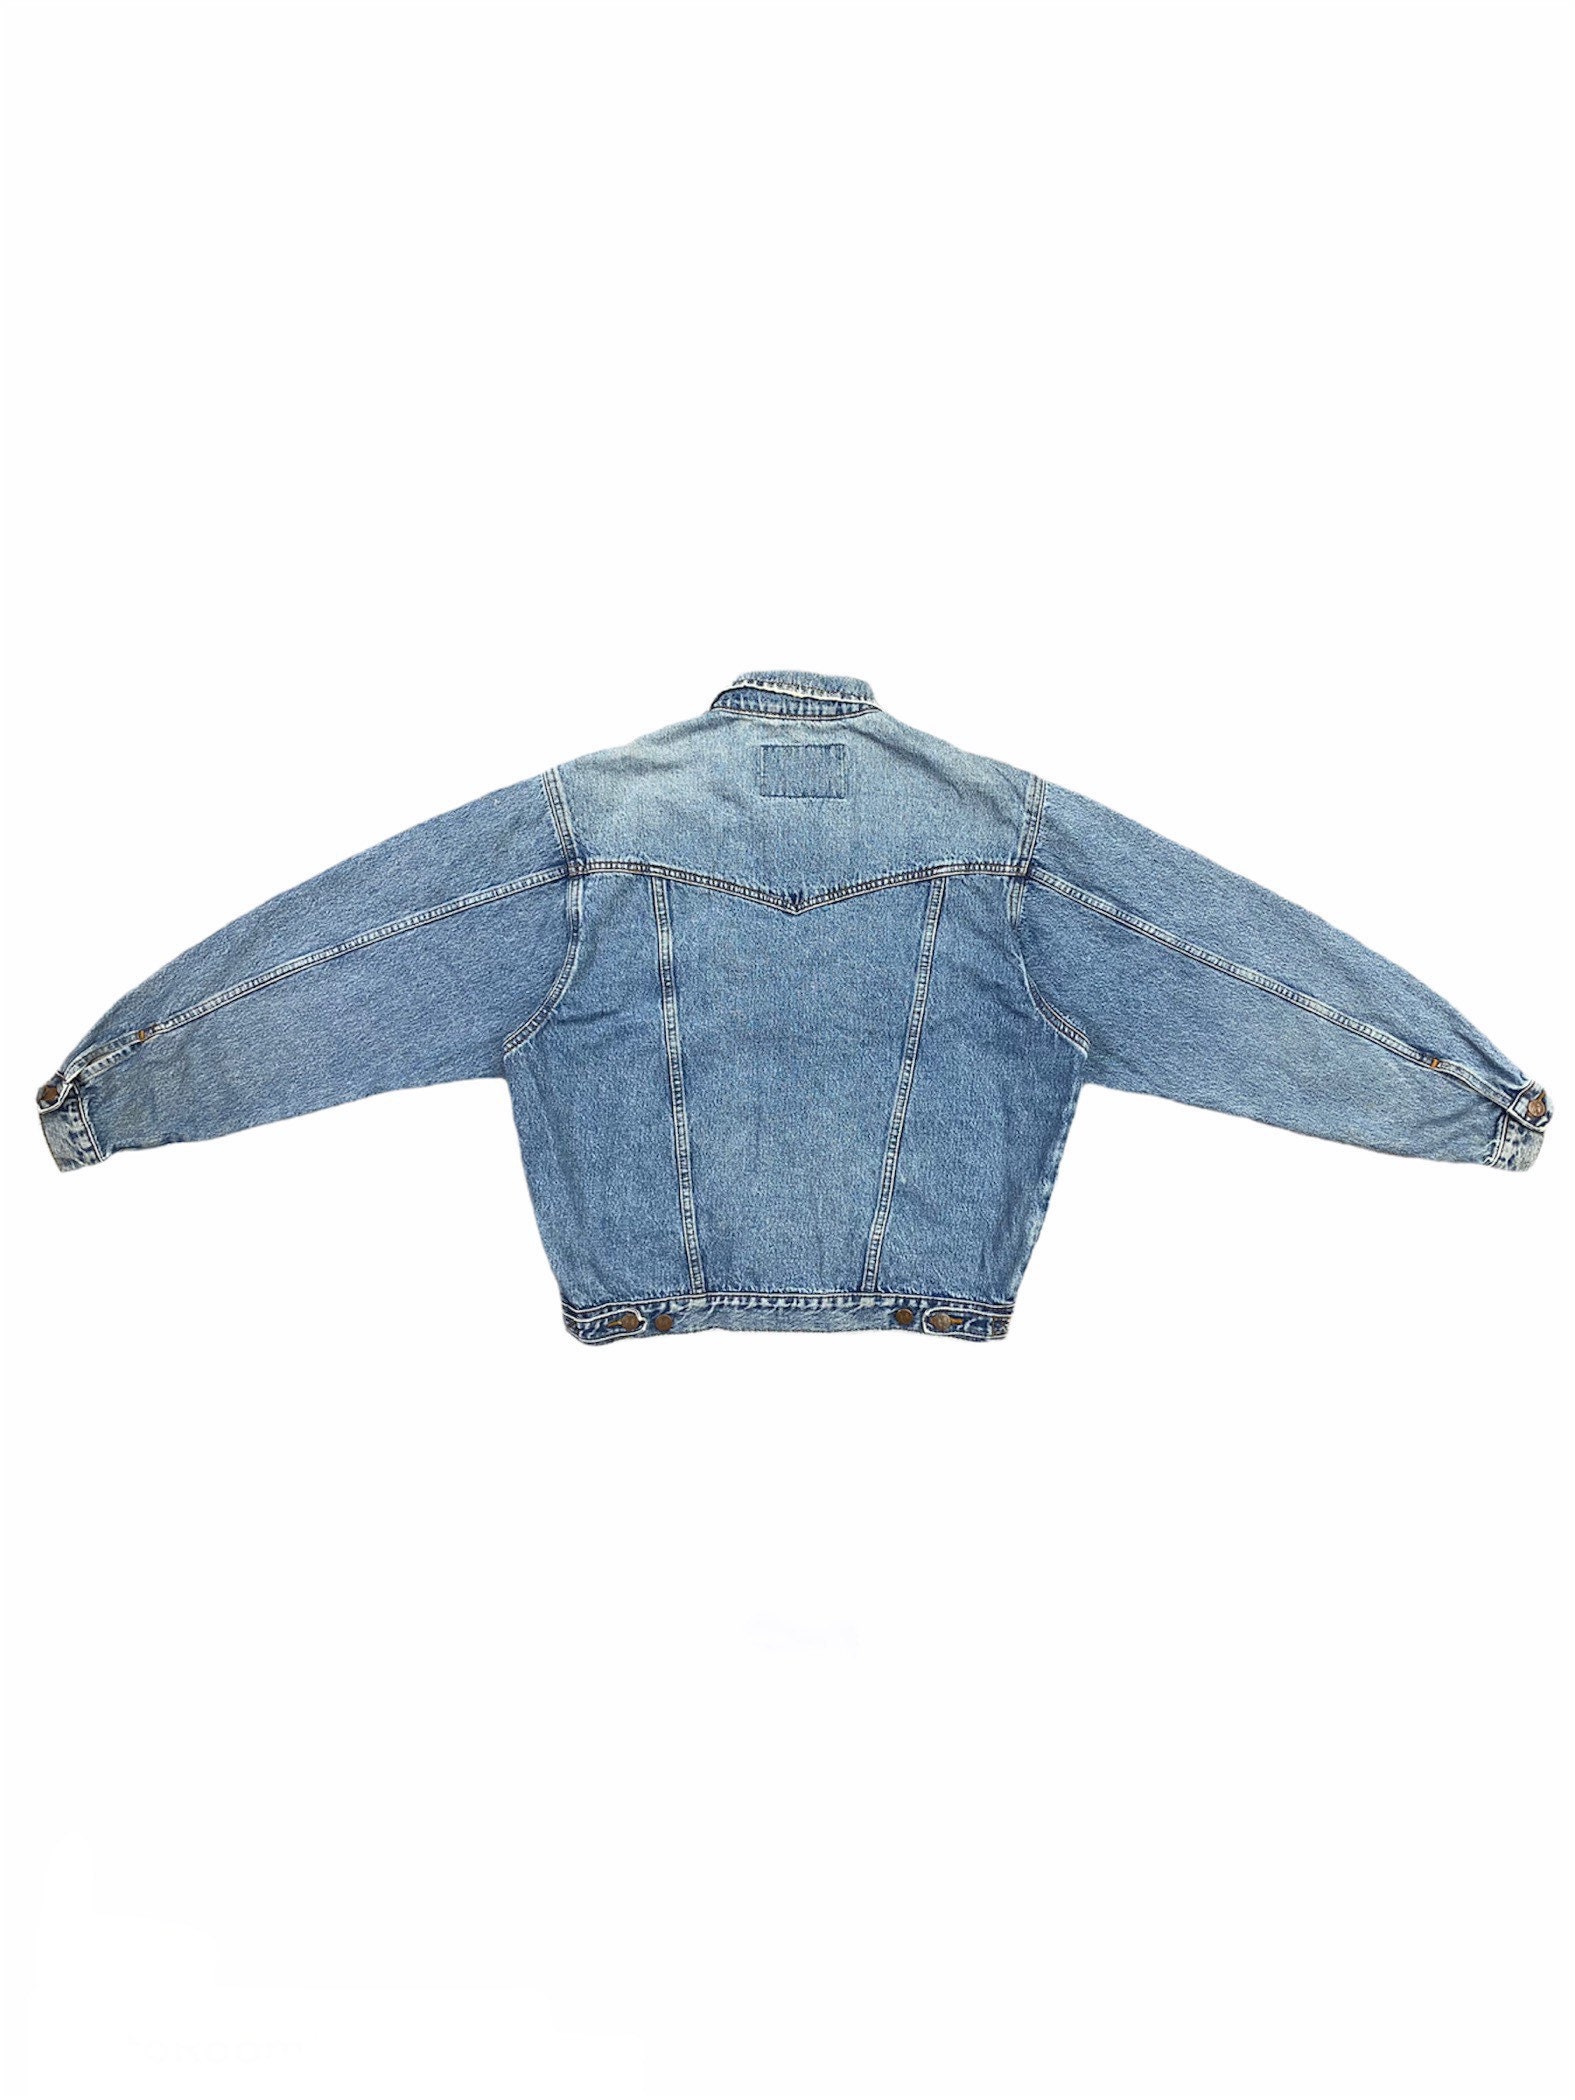 Vintage Wrangler Denim Jean Jacket Light Medium Blue Wash | Etsy